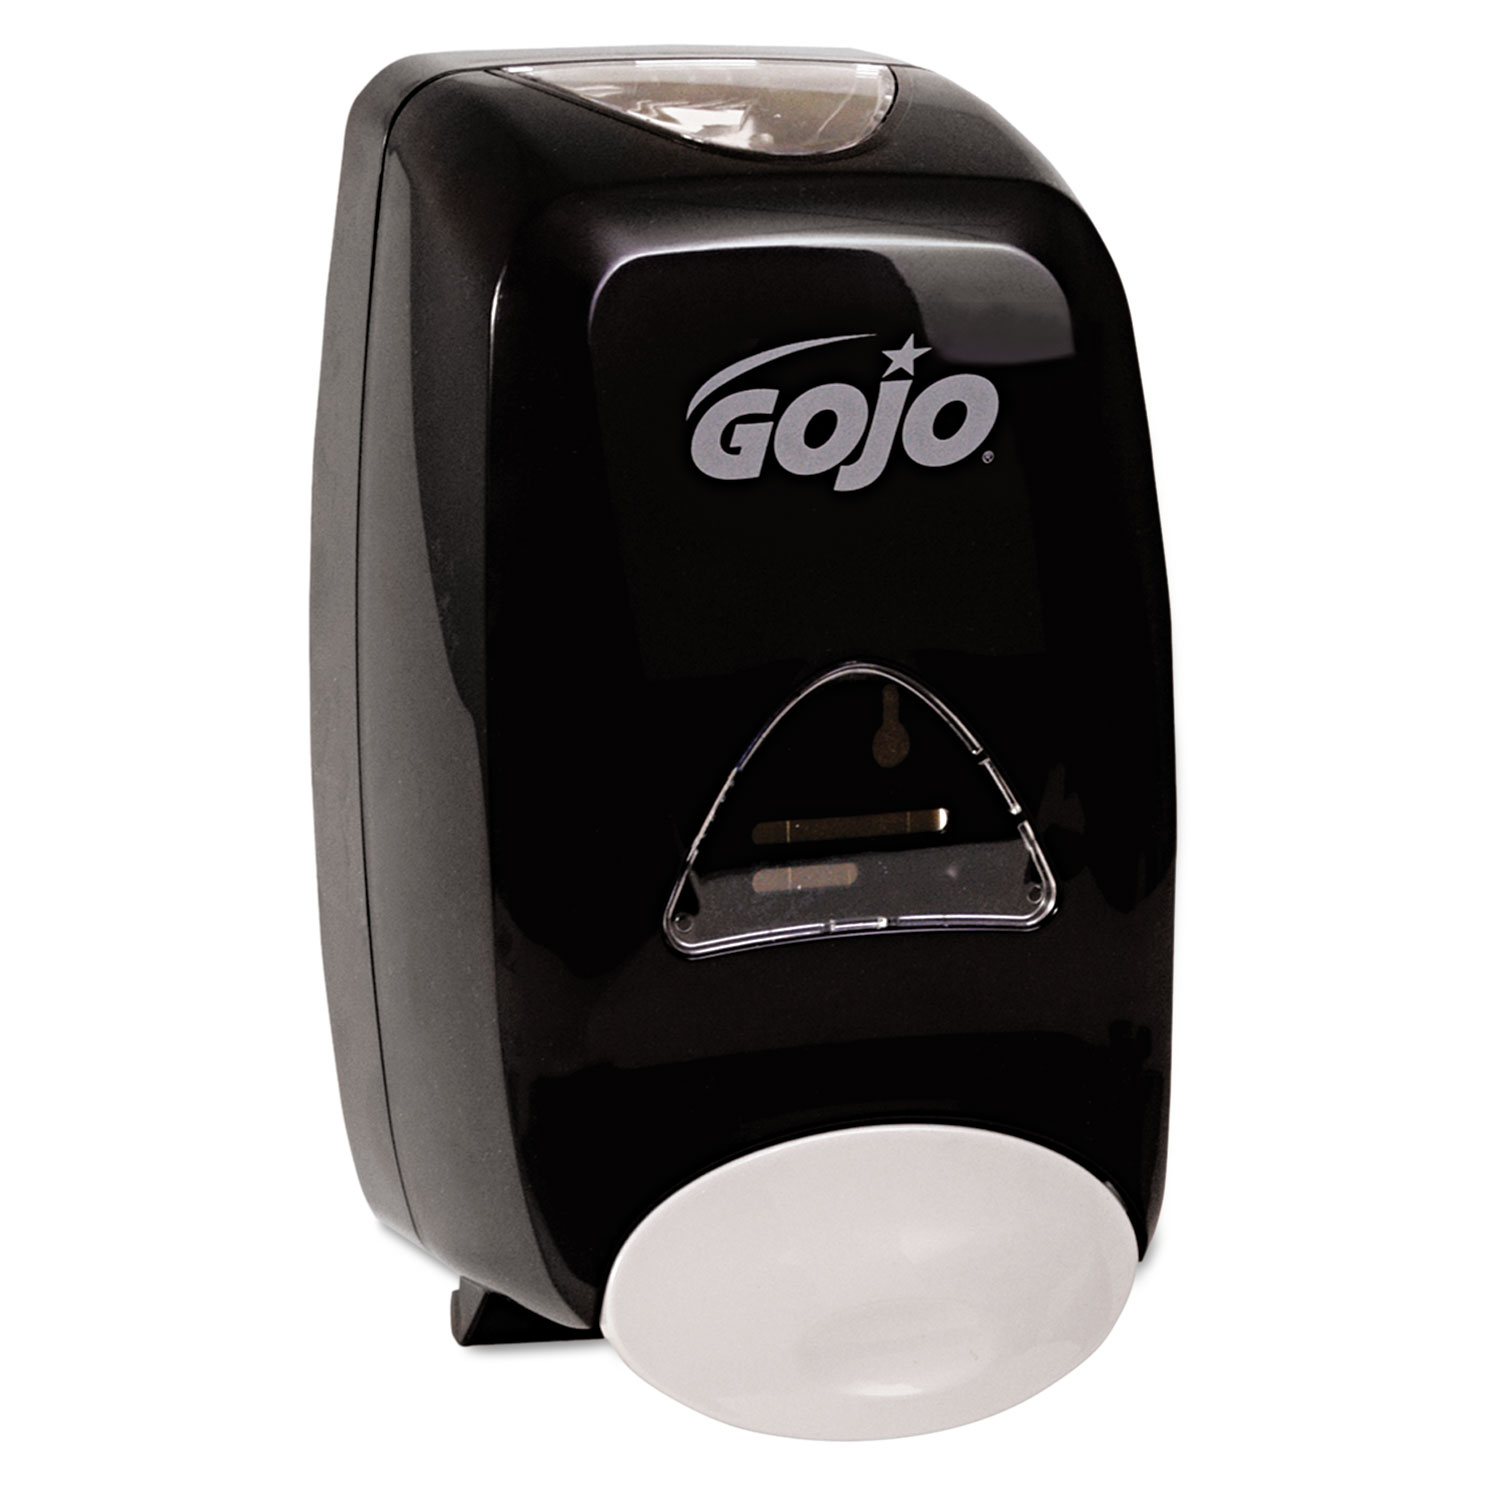  GOJO 5155-06 FMX-12 Soap Dispenser, 1250 mL, 6.13 x 5.12 x 10.5, Black (GOJ515506) 